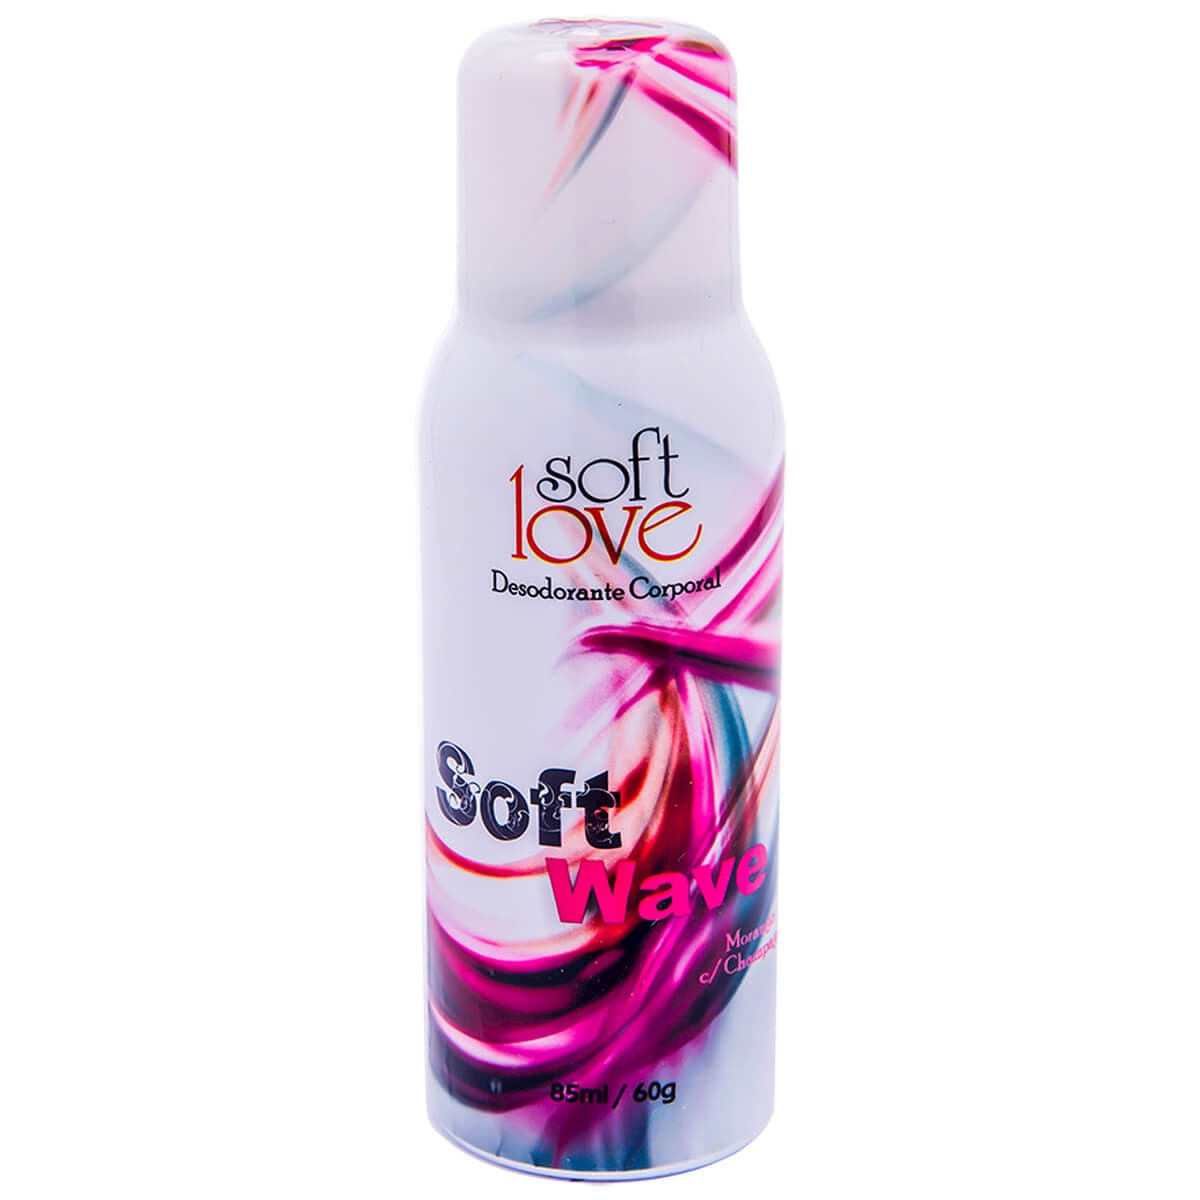 Soft Wave Morango com Champagne Desodorante Corporal 85ml/60g Soft Love